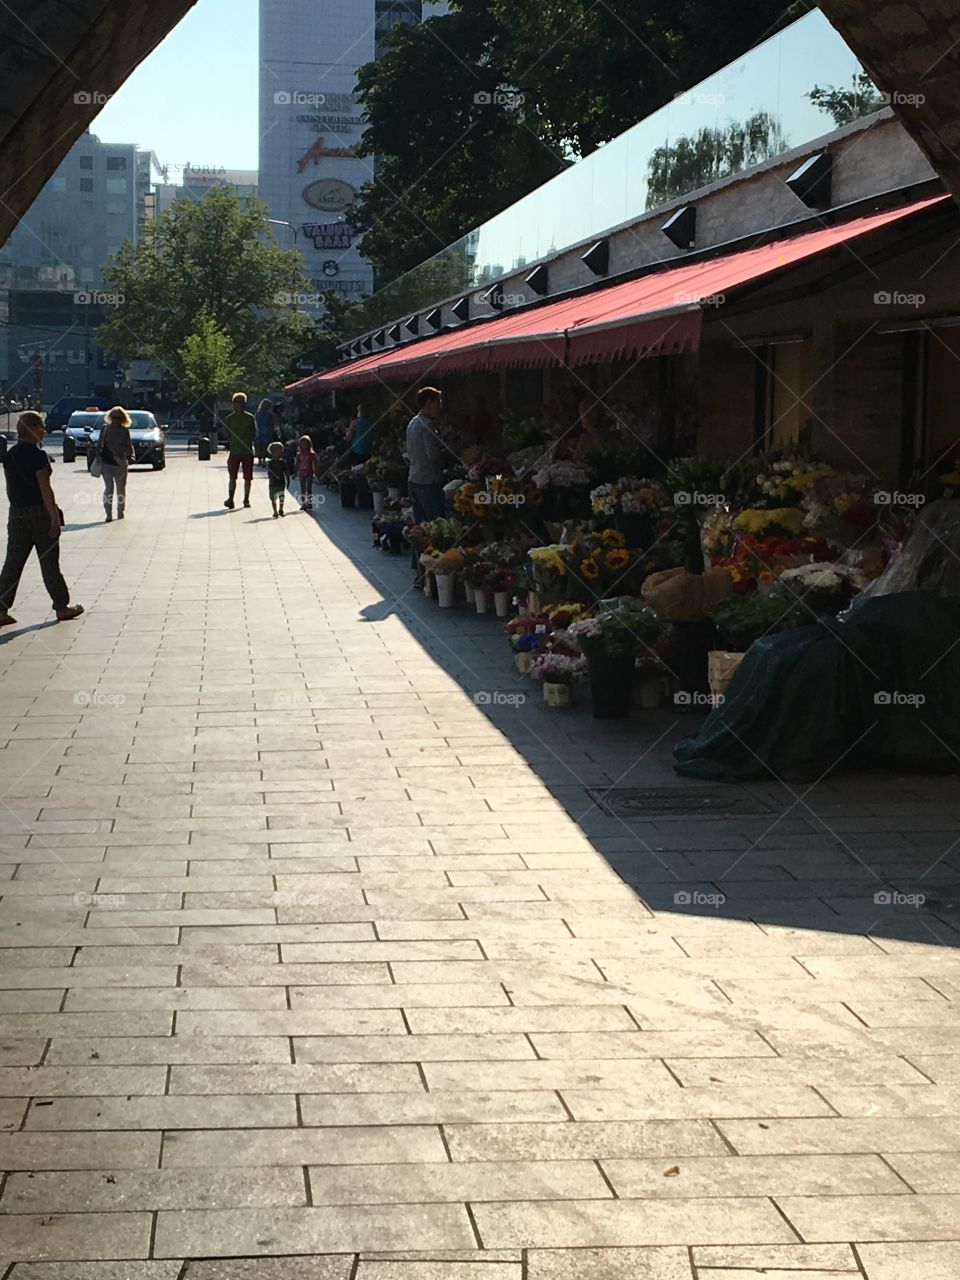 Flower market 